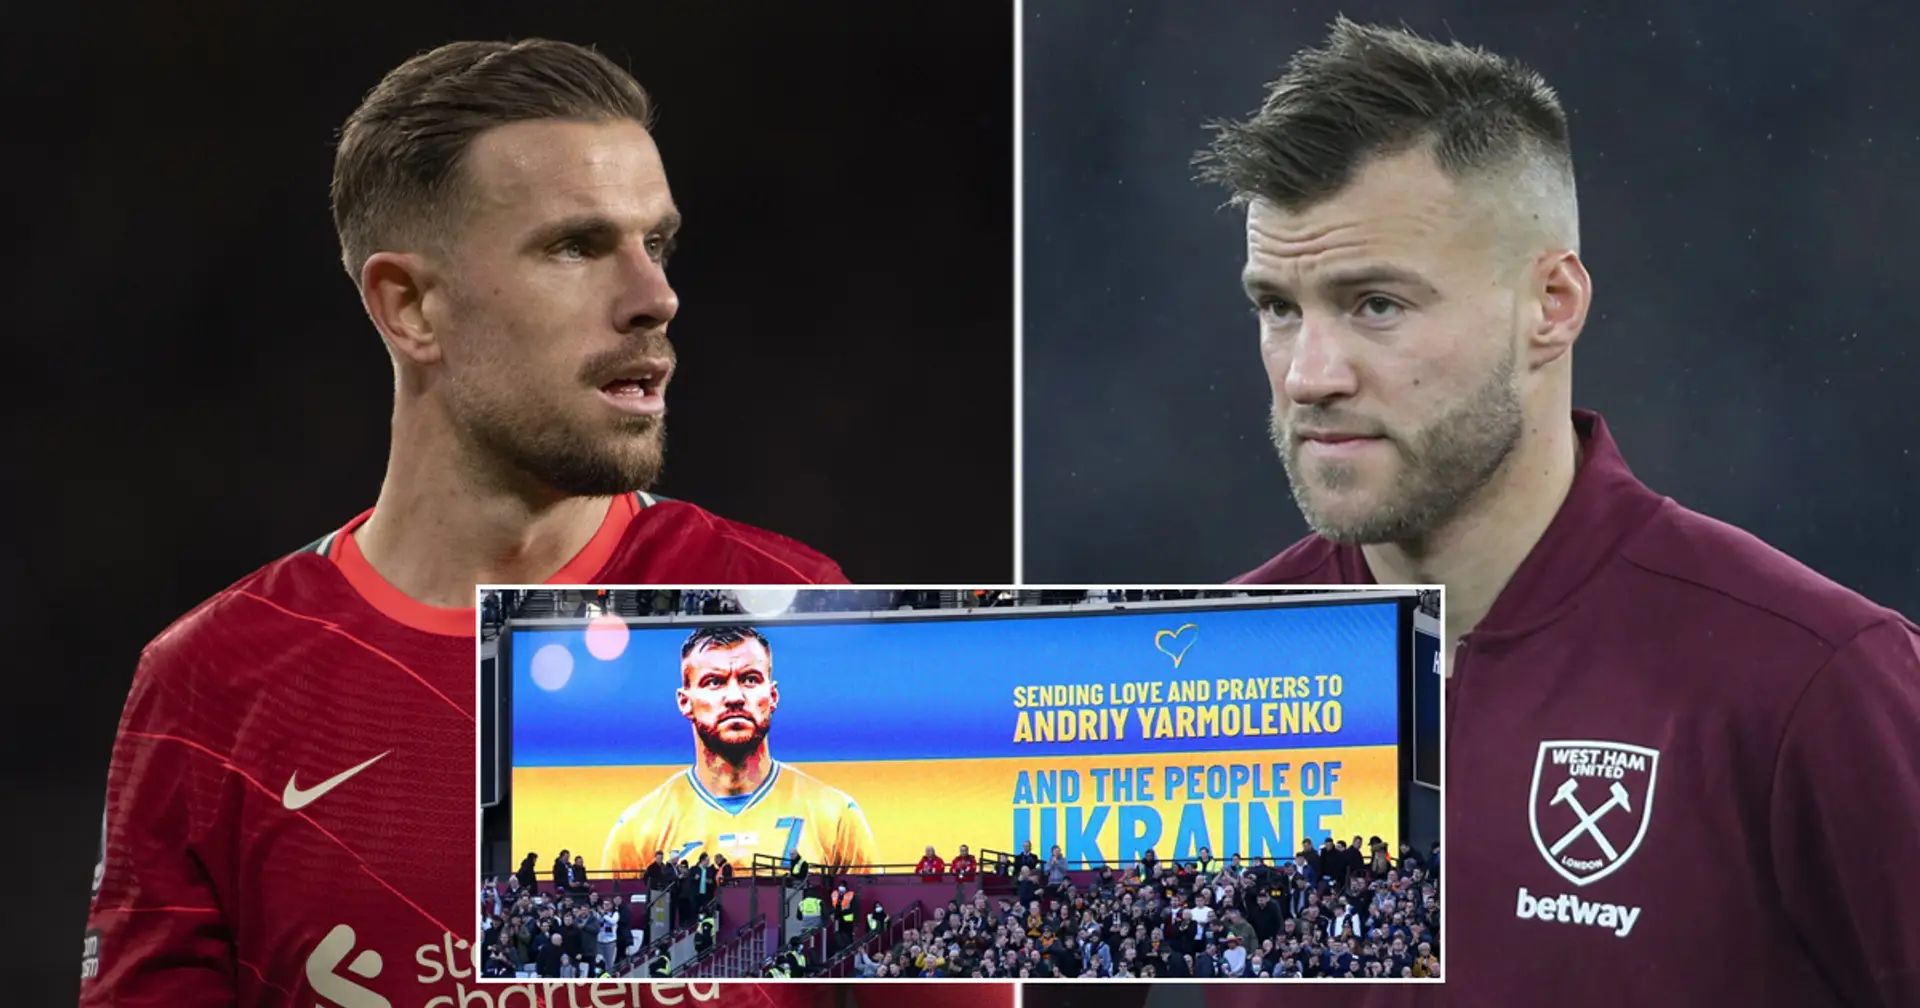 Jordan Henderson states 'everyone at Liverpool stands with' West Ham's Andriy Yarmolenko amid war in Ukraine